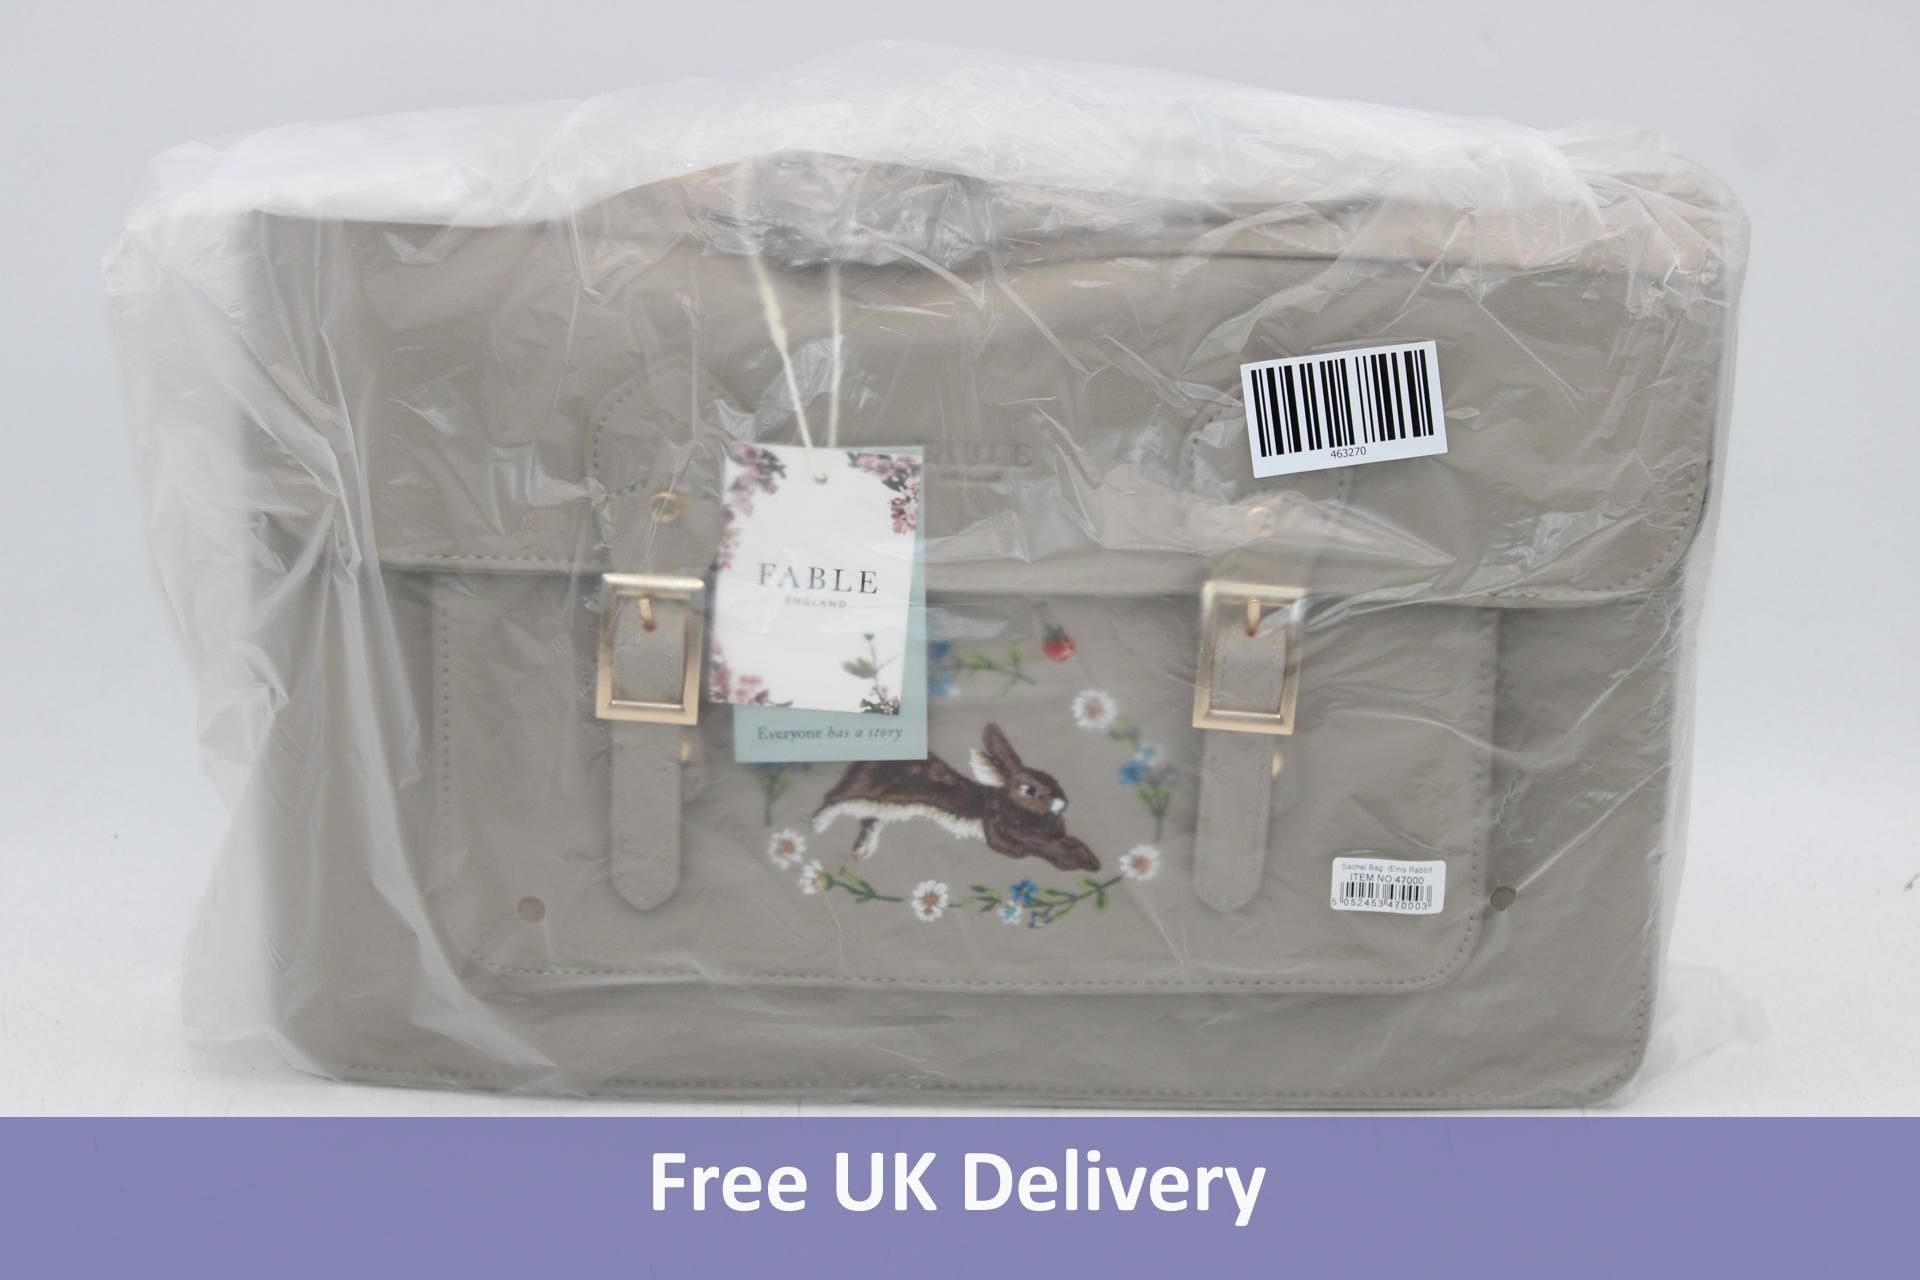 Fable England Rabbit Embroidered Satchel Bag, Soft Grey, 36 L x 25 H x 13 D cm